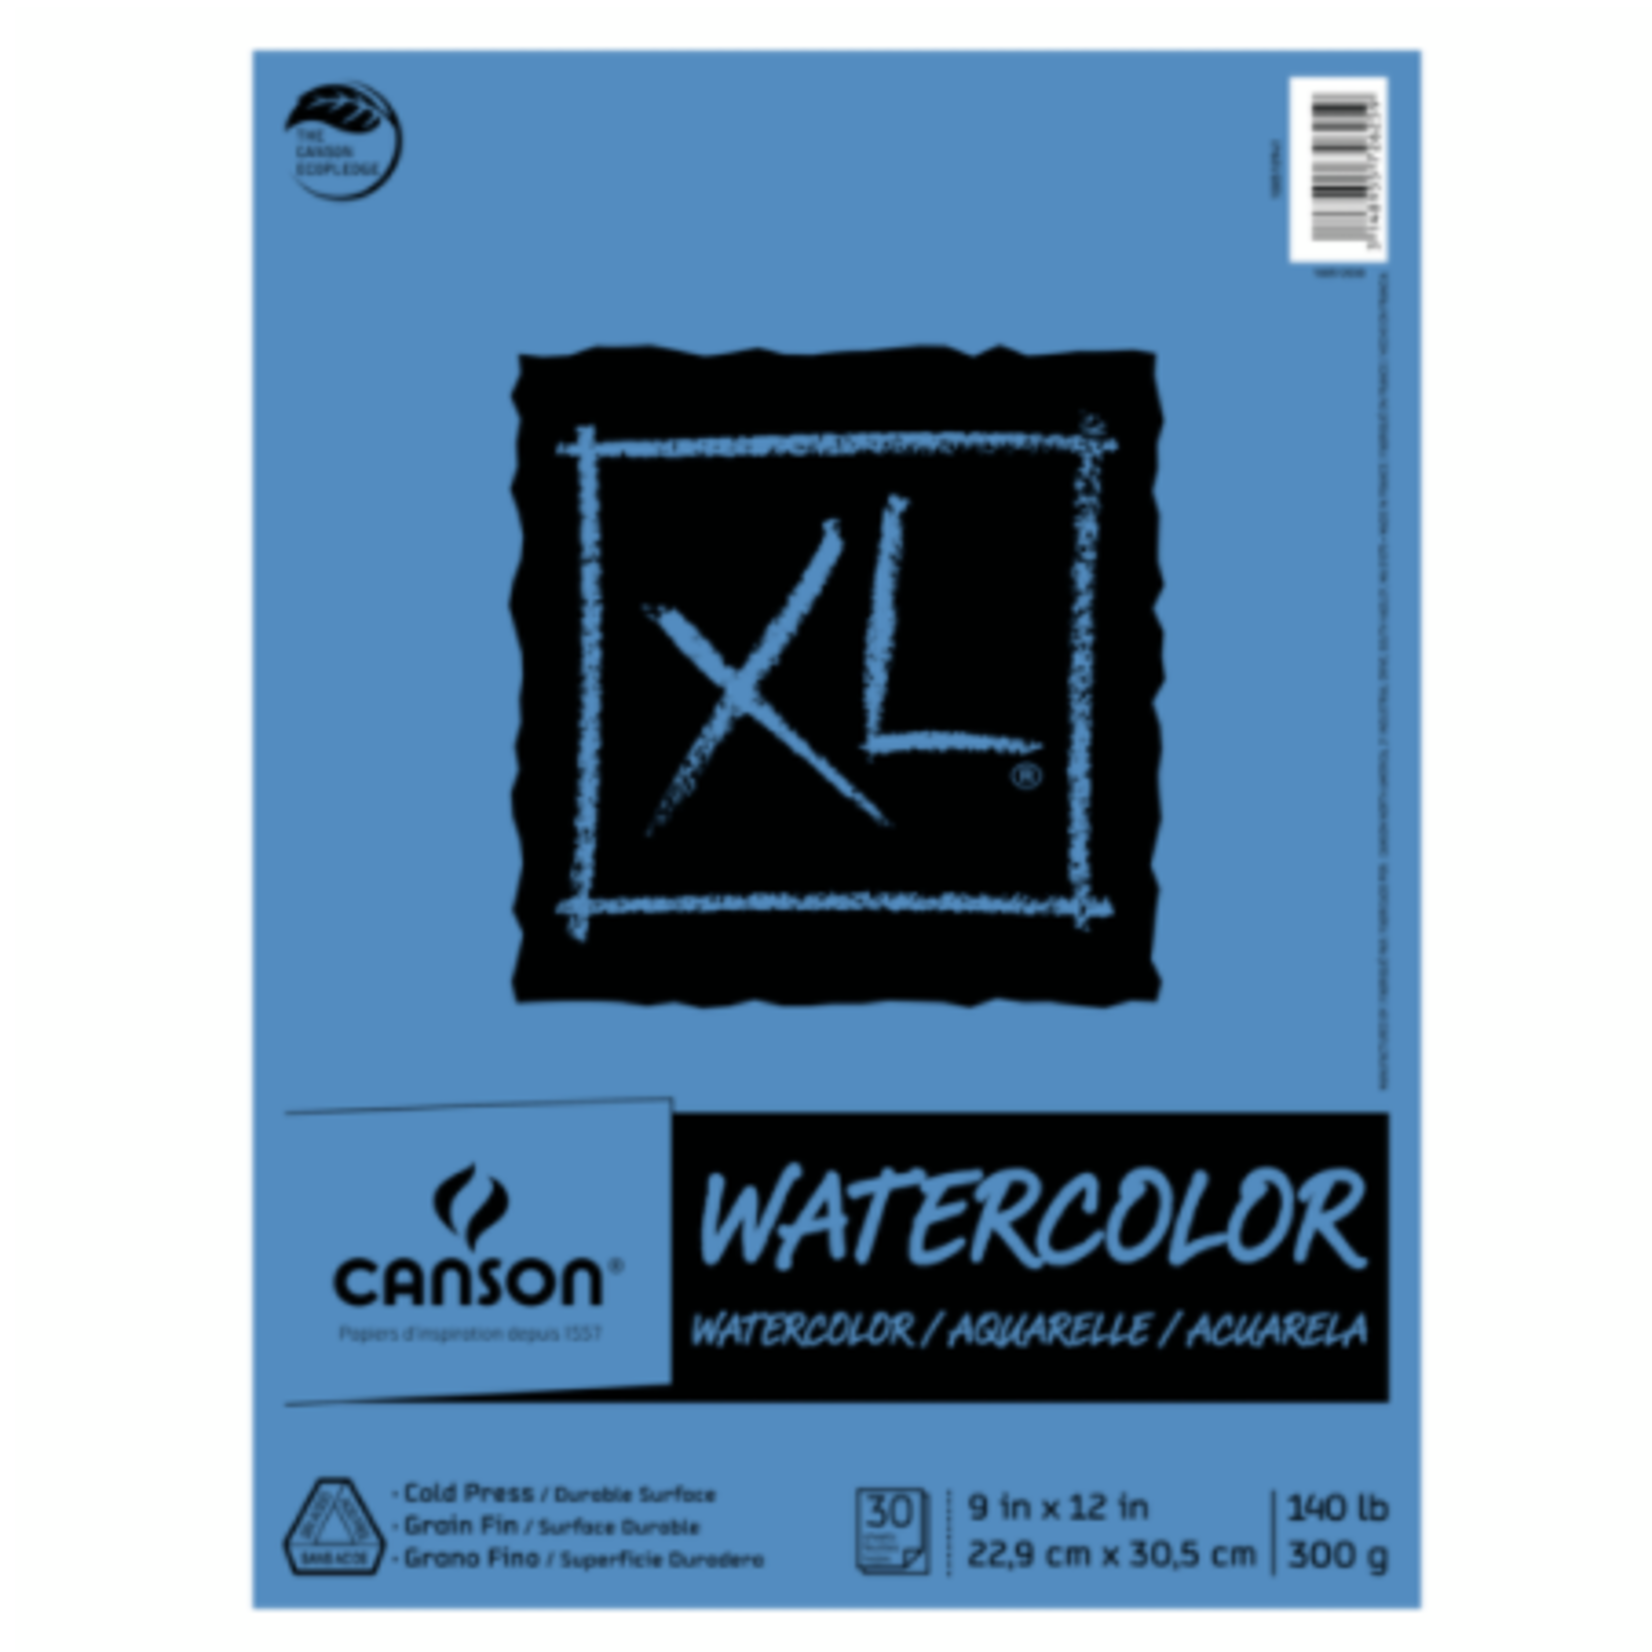 CANSON CANSON XL WATERCOLOUR PAD 140LB 9X12 TAPE BOUND 30/SHEET